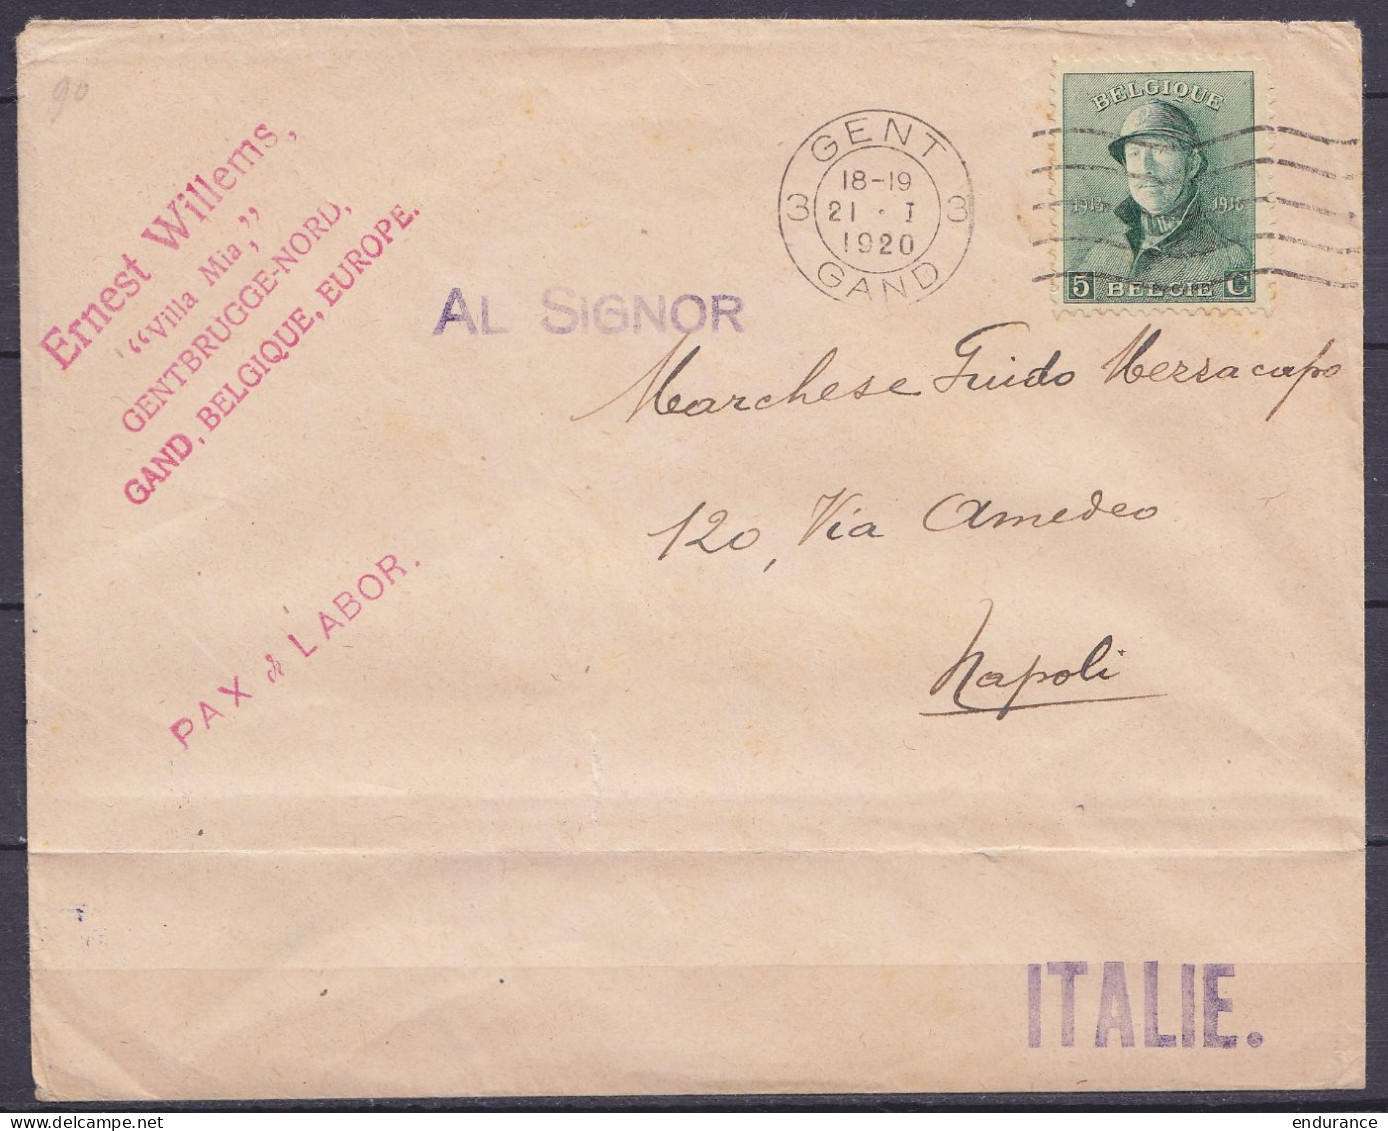 Env. Affr. N°167 (tarif Imprimés) Flam. "GENT 3/12.I 1920/ GAND 3" Pour NAPOLI (Naples) Italie - 1919-1920 Behelmter König